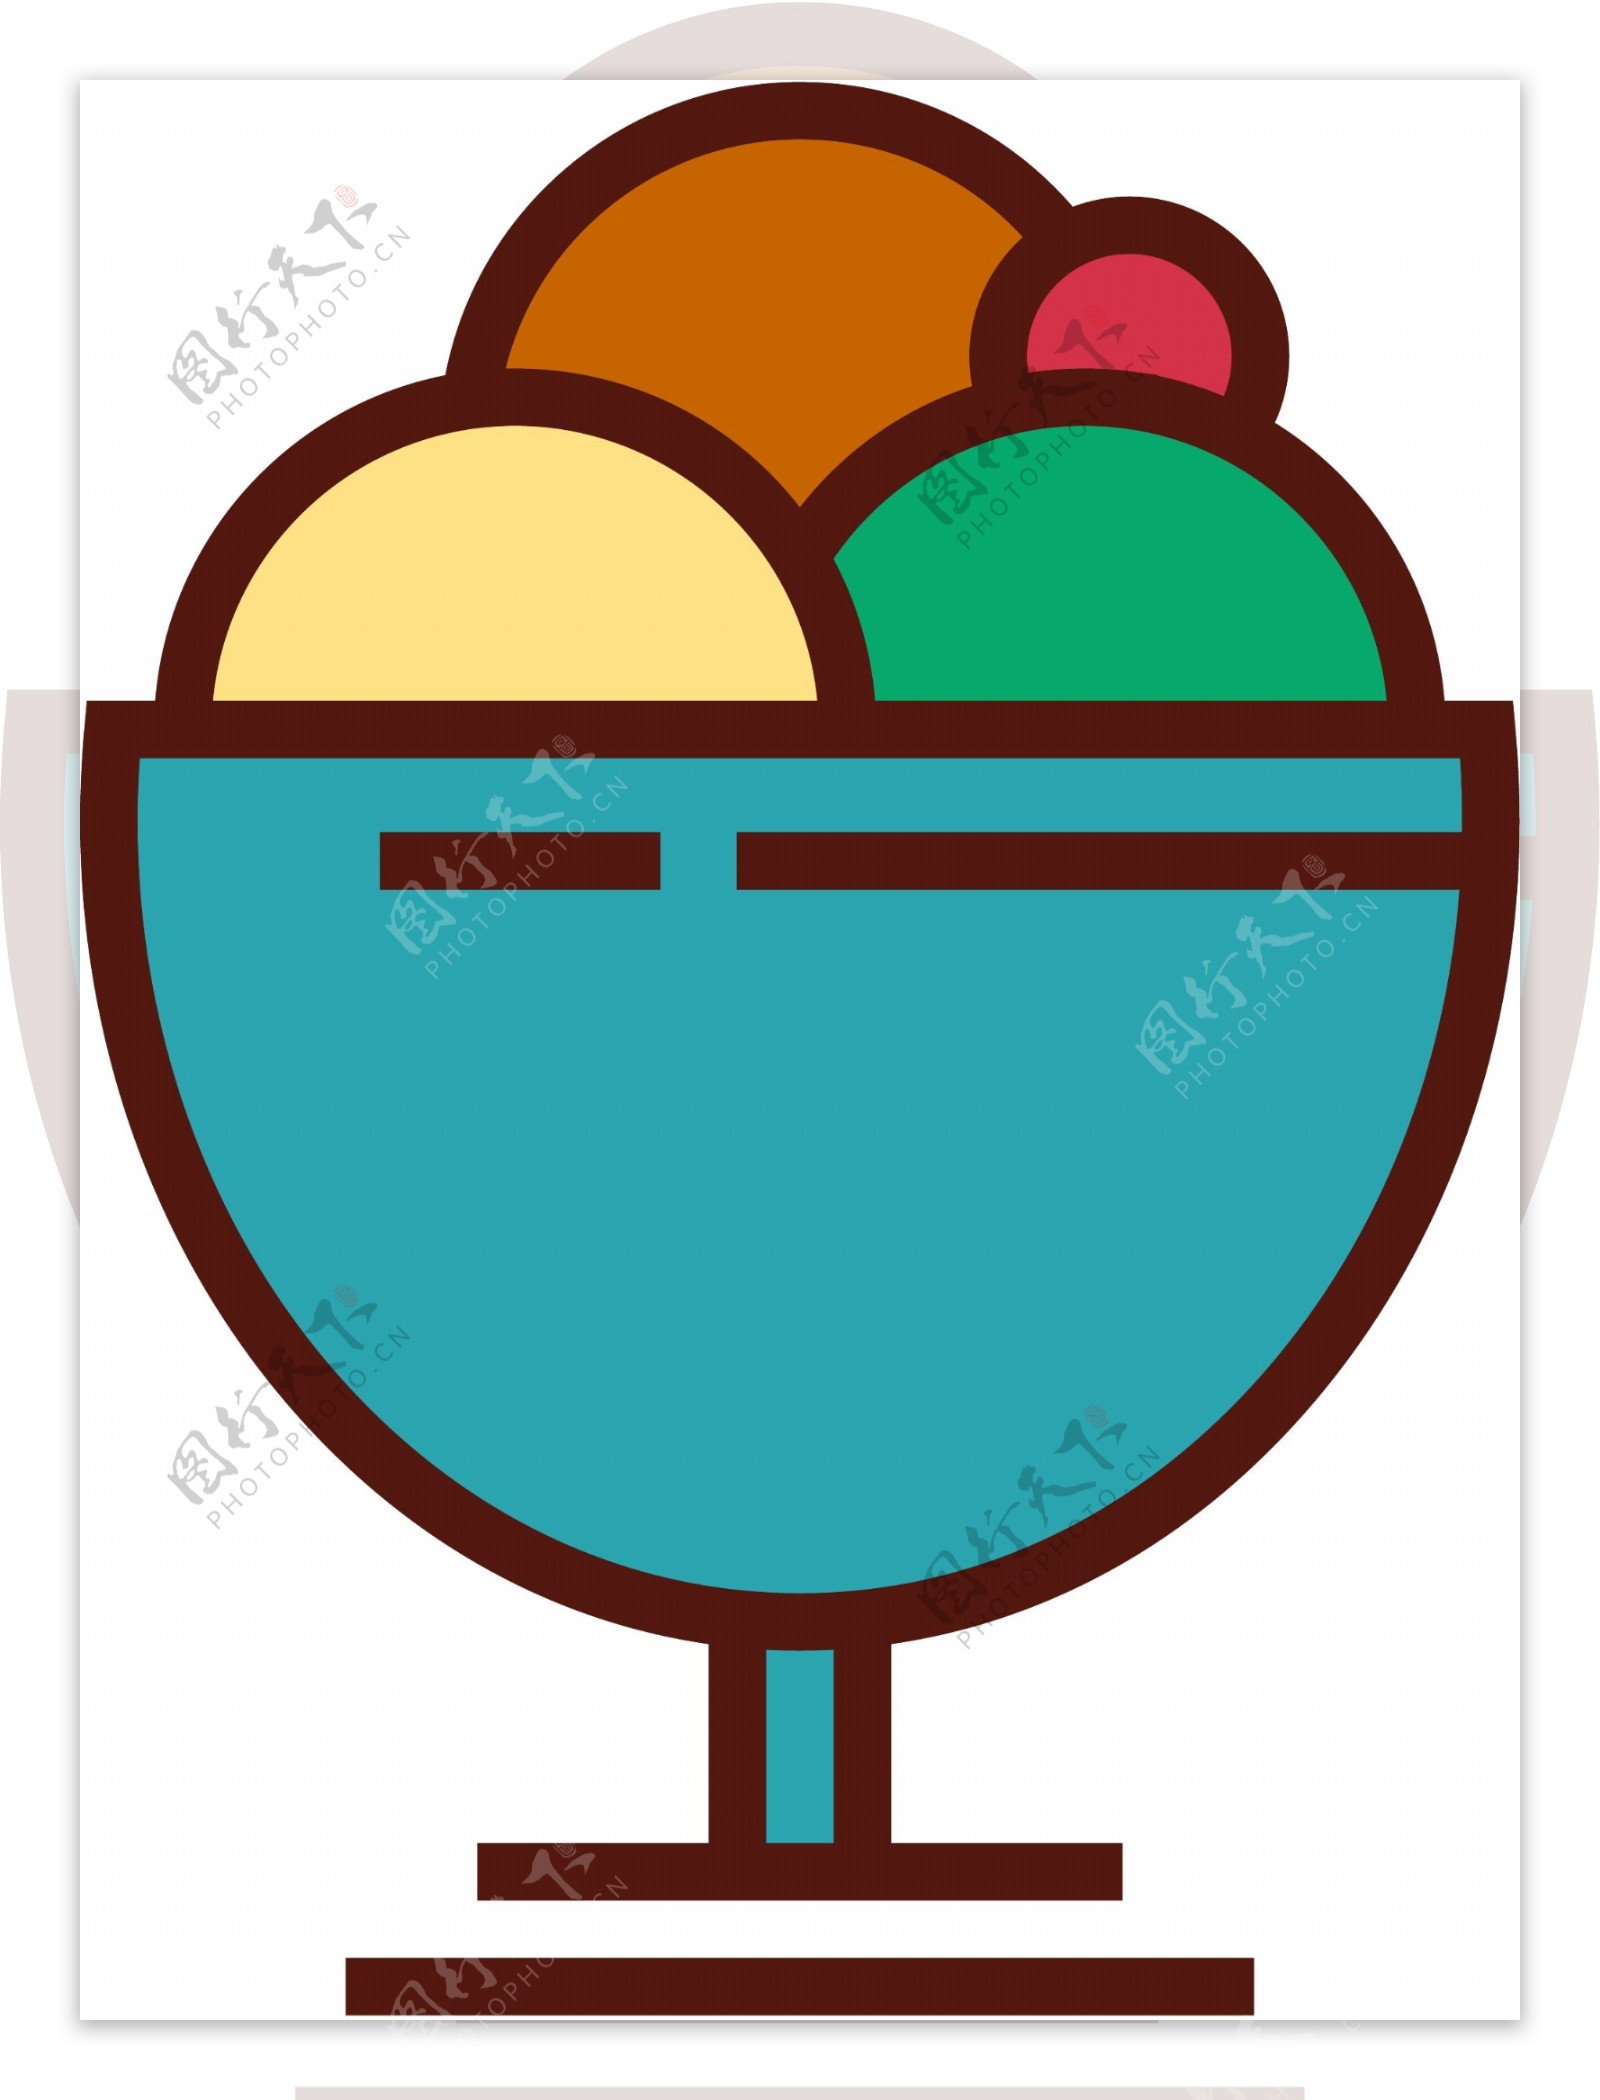 冰淇凌icon图标素材